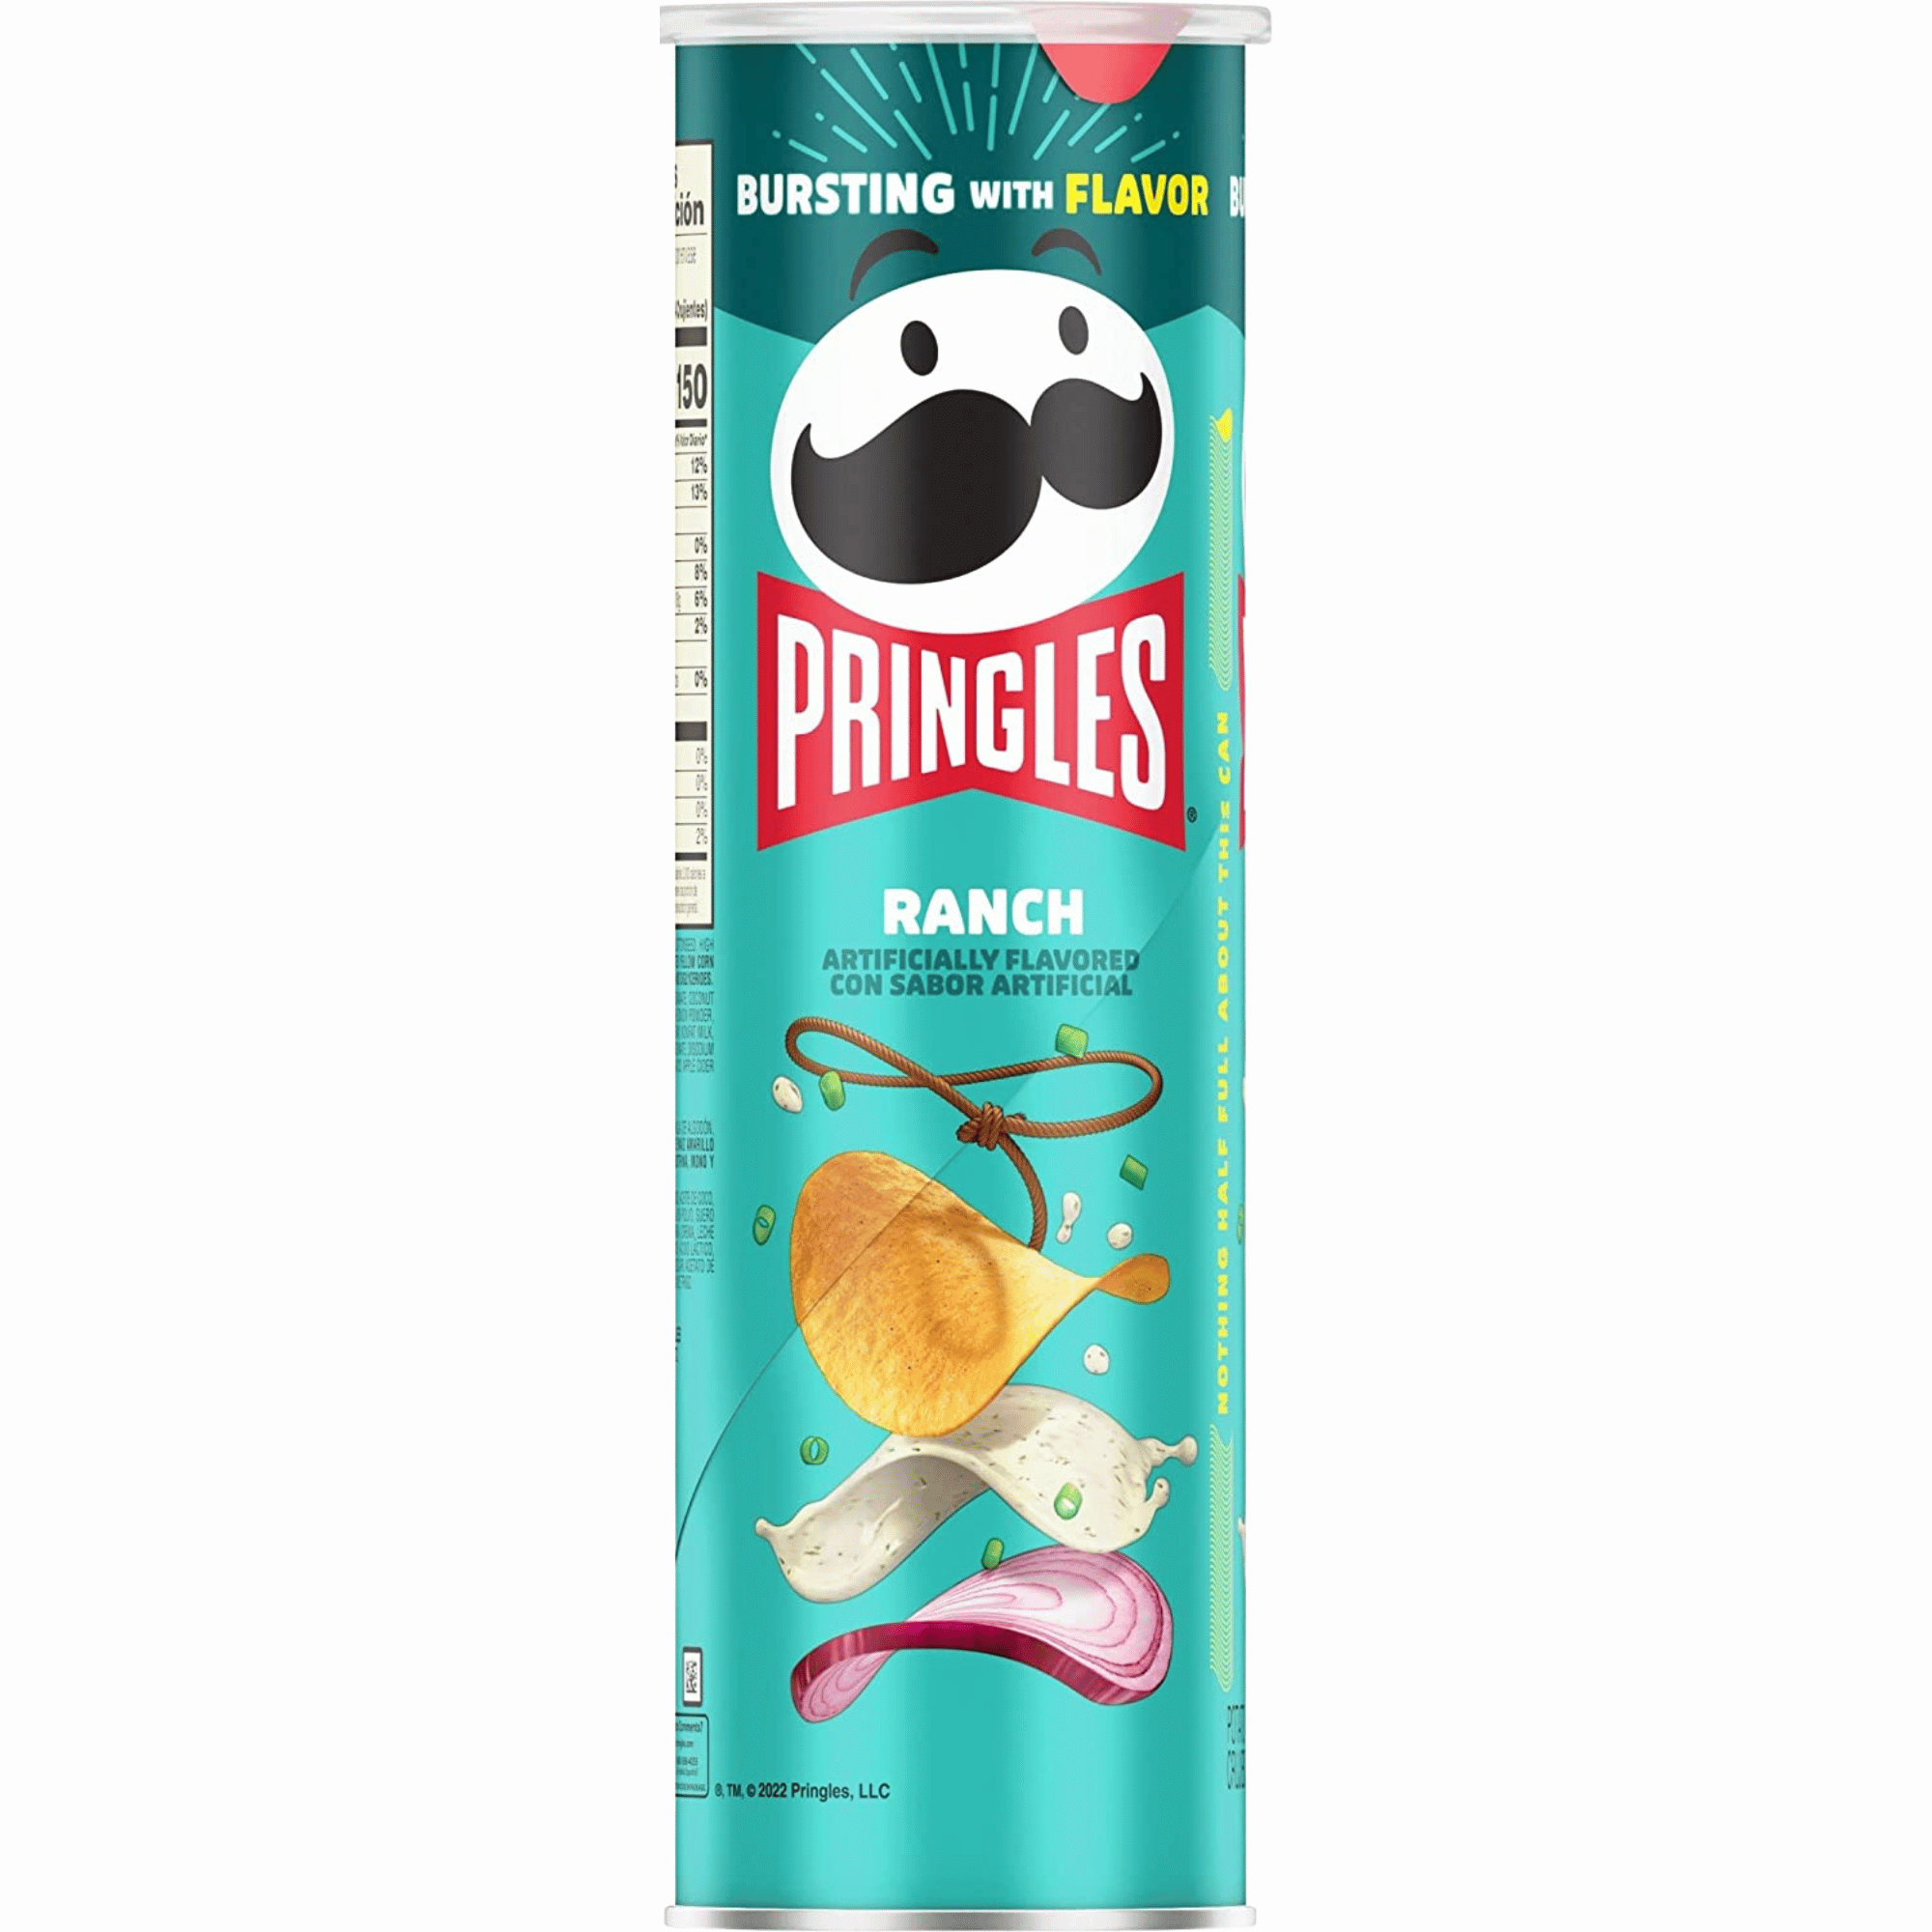 Pringles Ranch Potato Crisps 156g – All You Can Snack